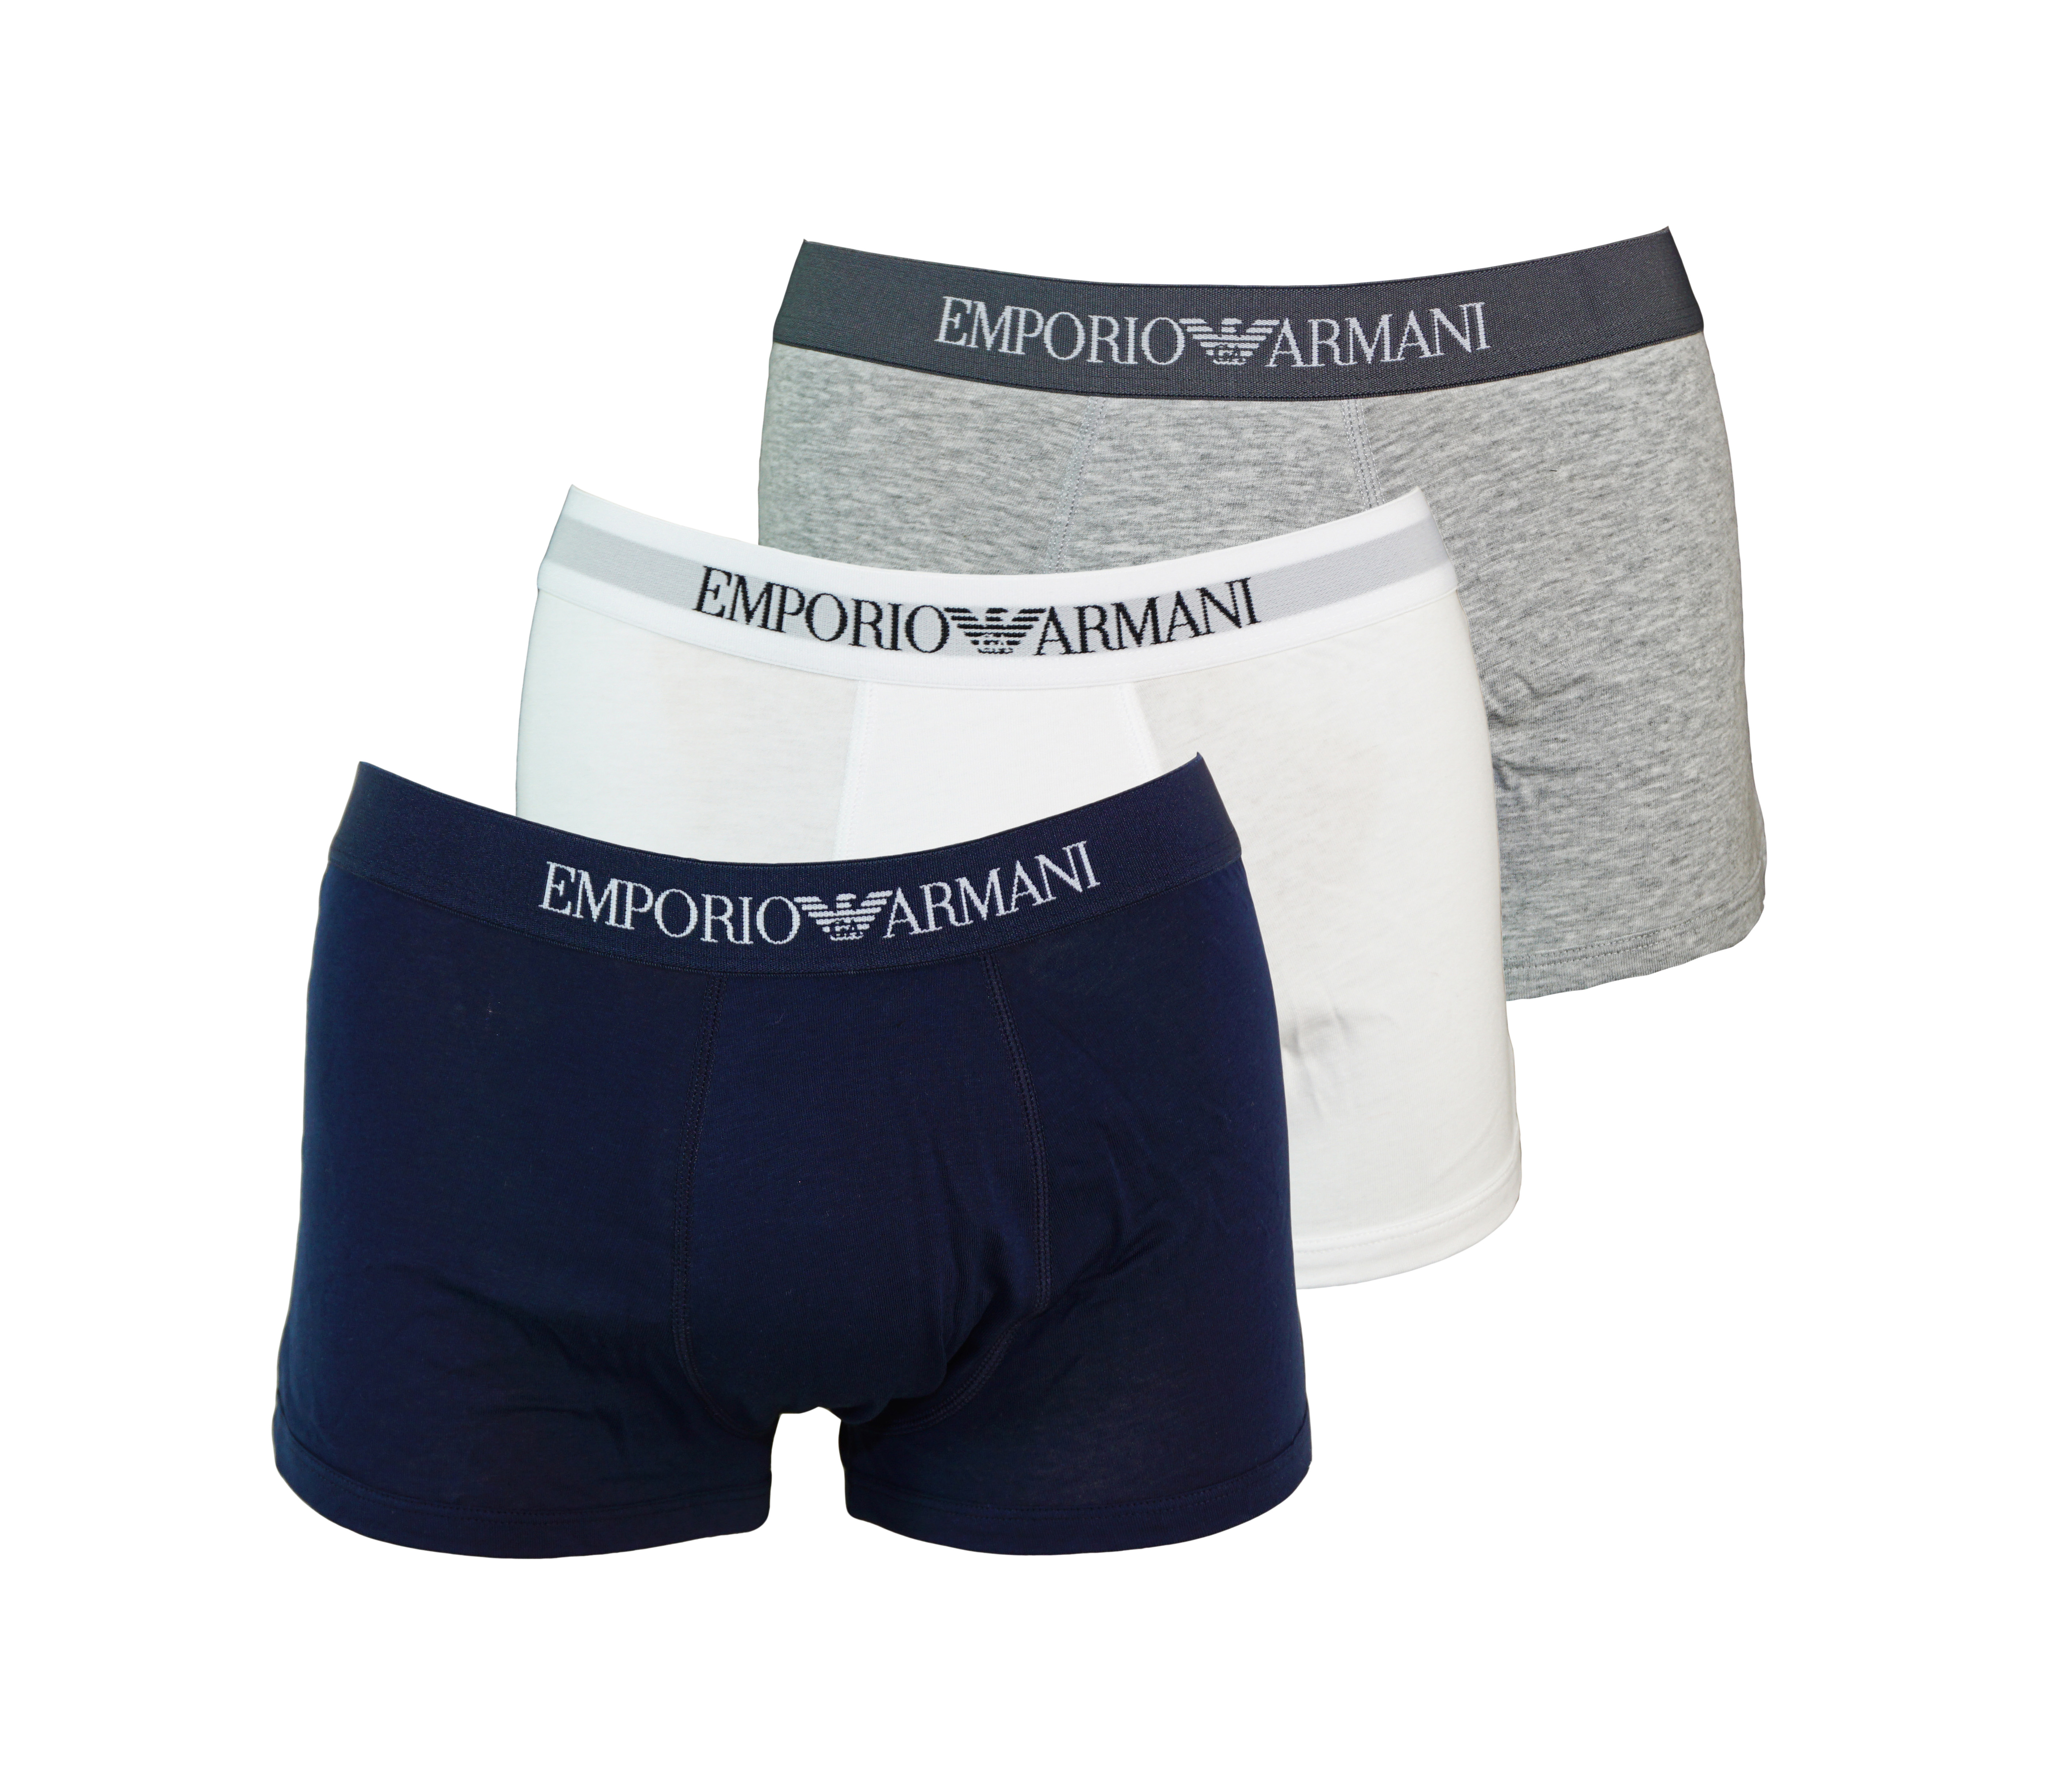 Emporio Armani 3er Pack Shorts Trunks Unterhosen BCO/GRIGIOMEL/MARINE 111610 CC722 40510